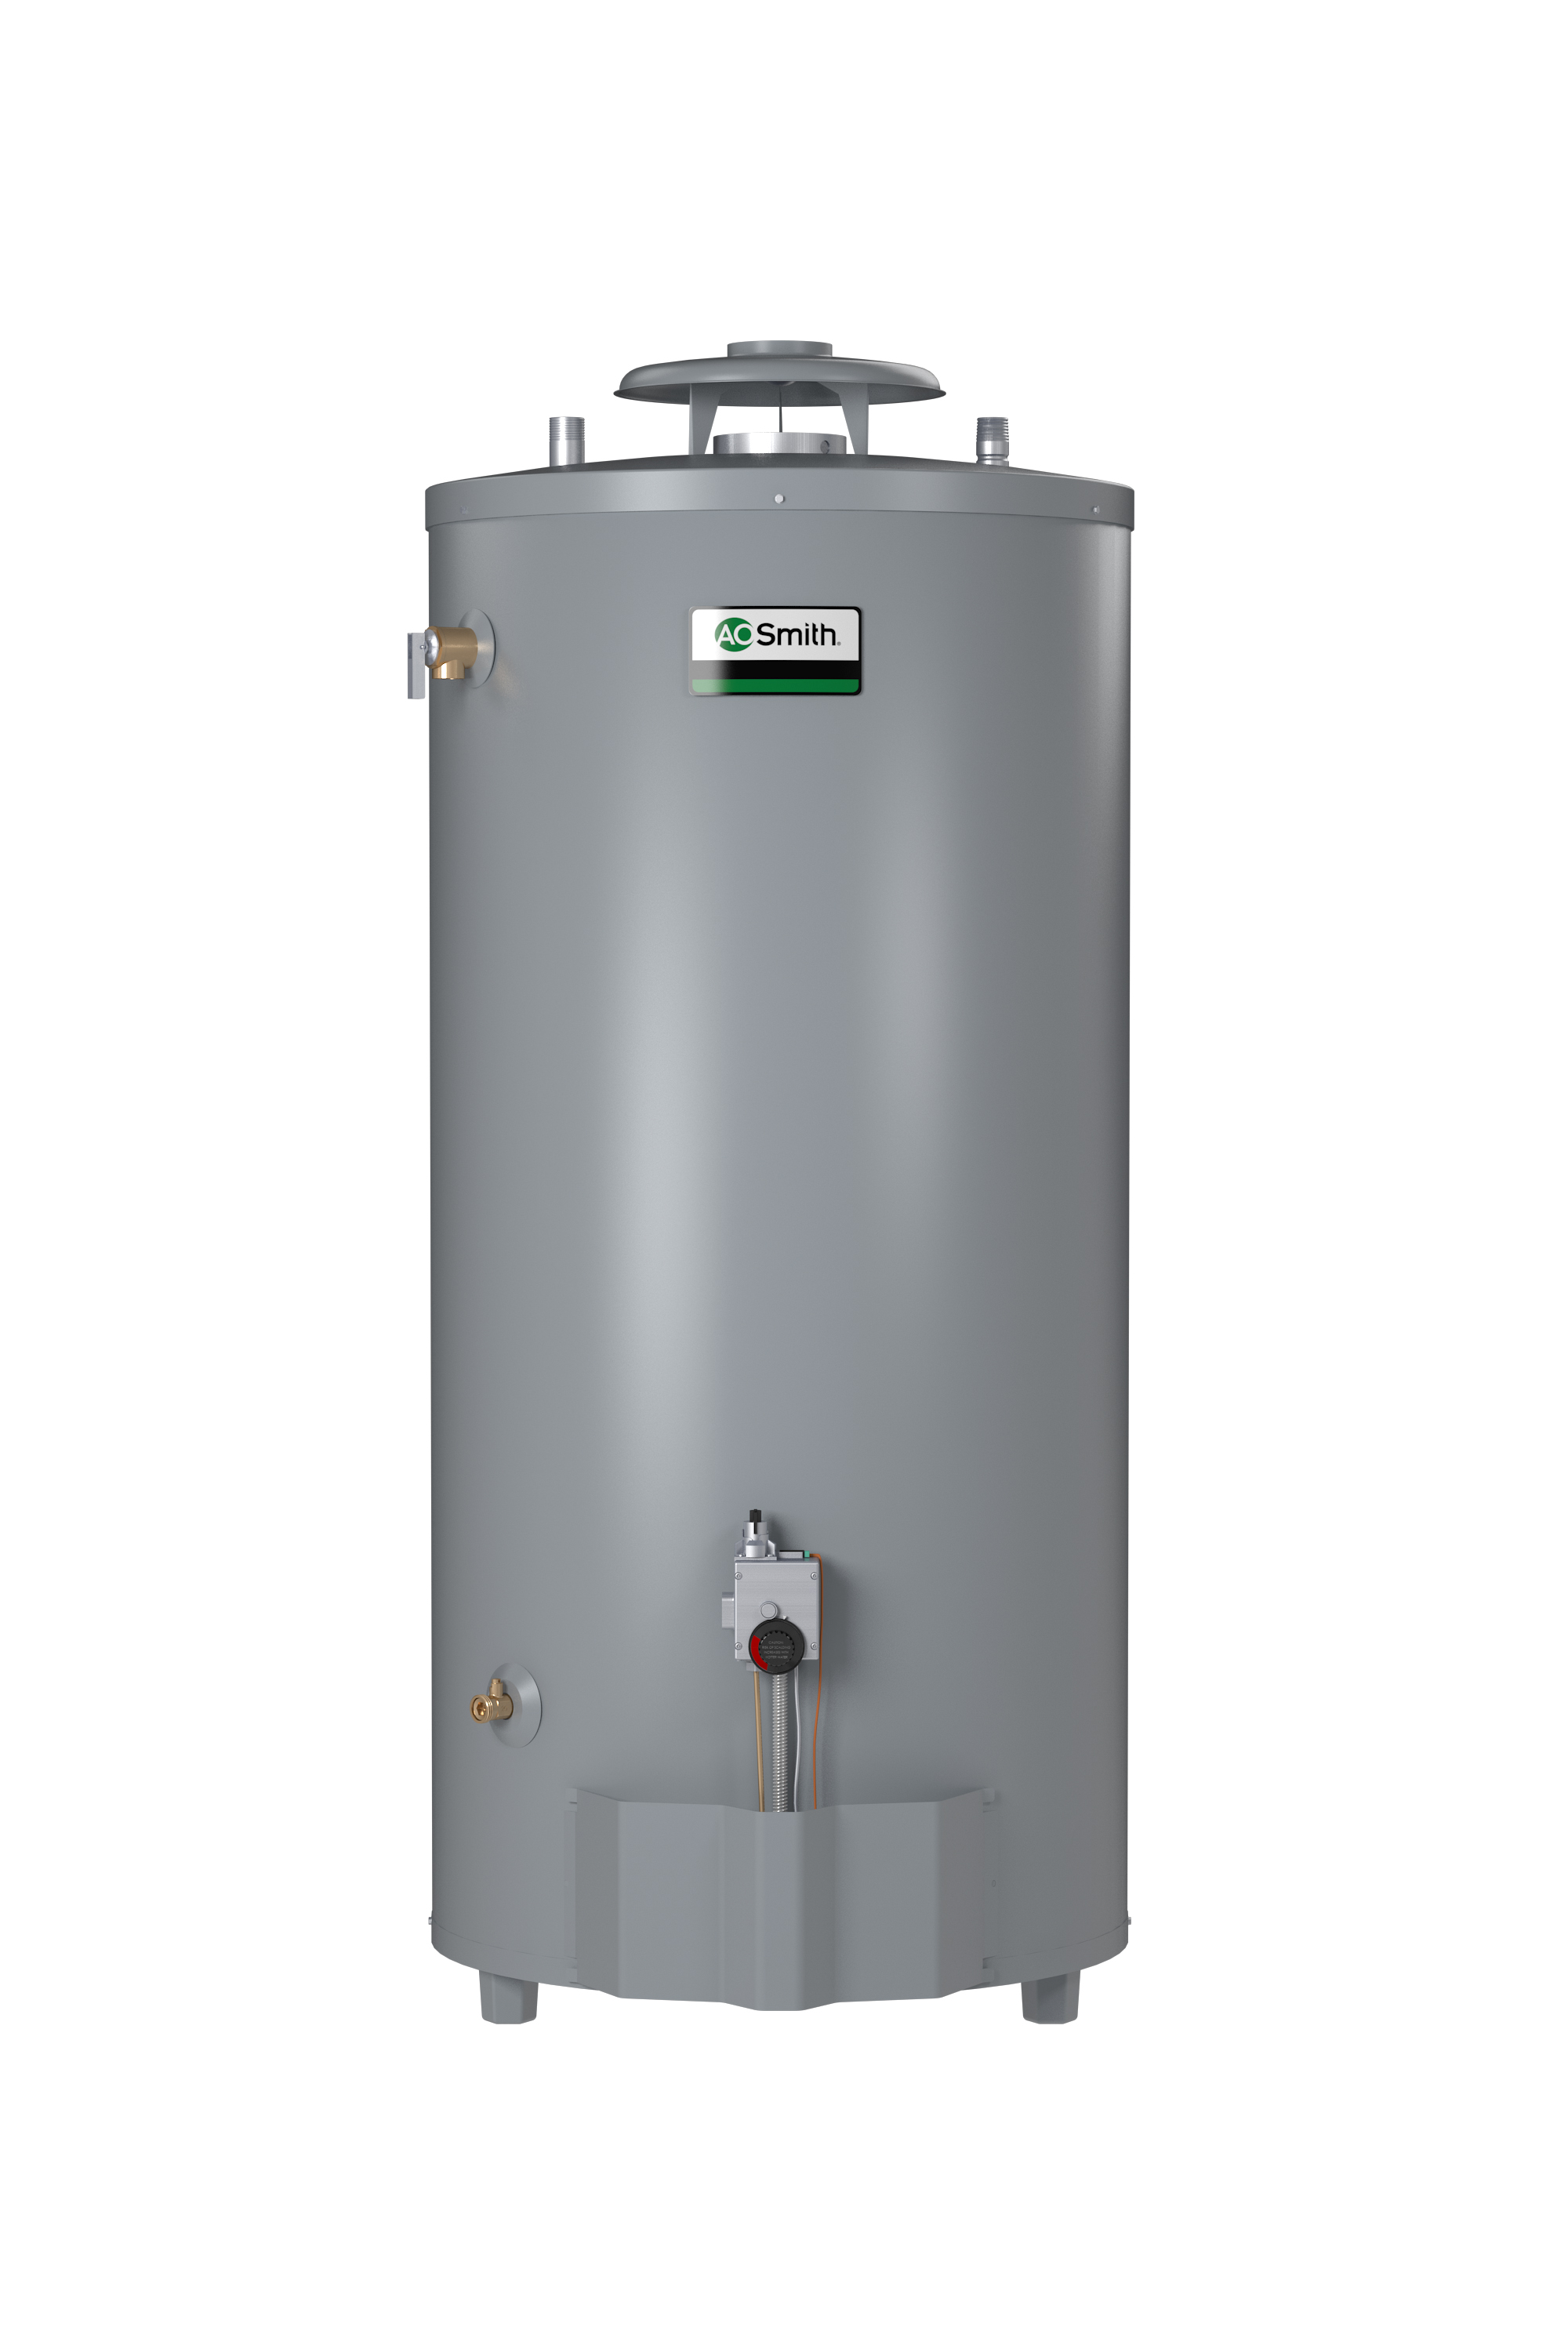 AO Smith BT Water Heater Propane